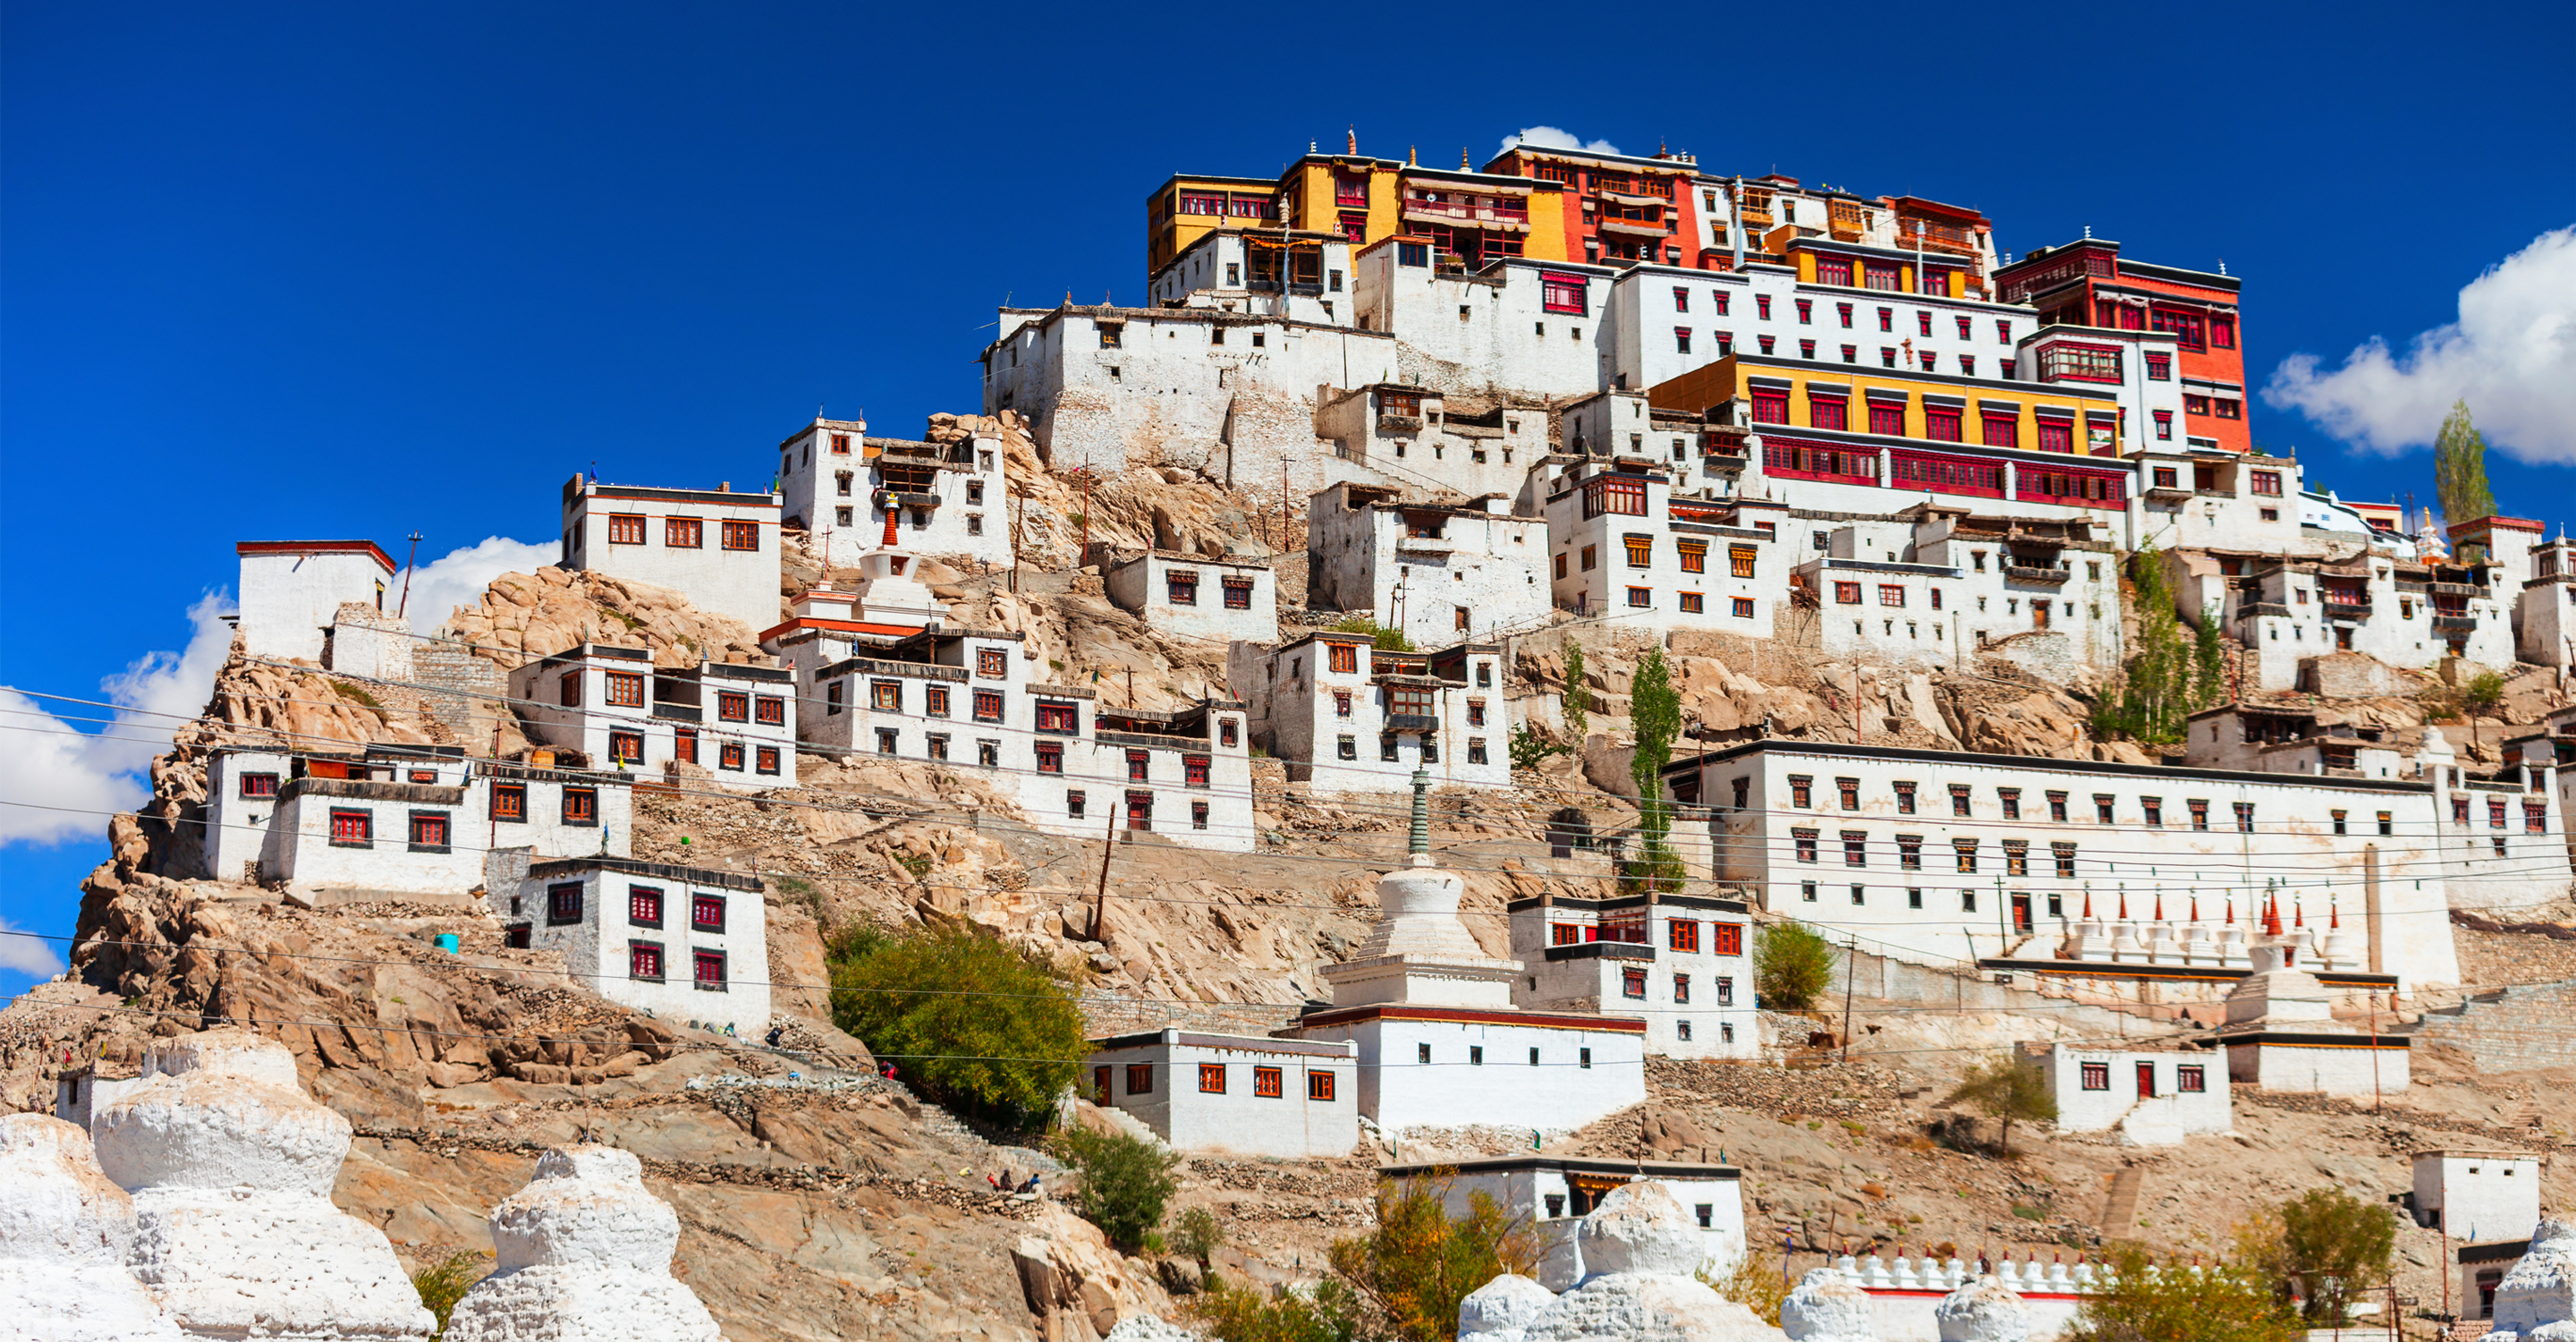 Thiksey Monastery in Ladakh, India